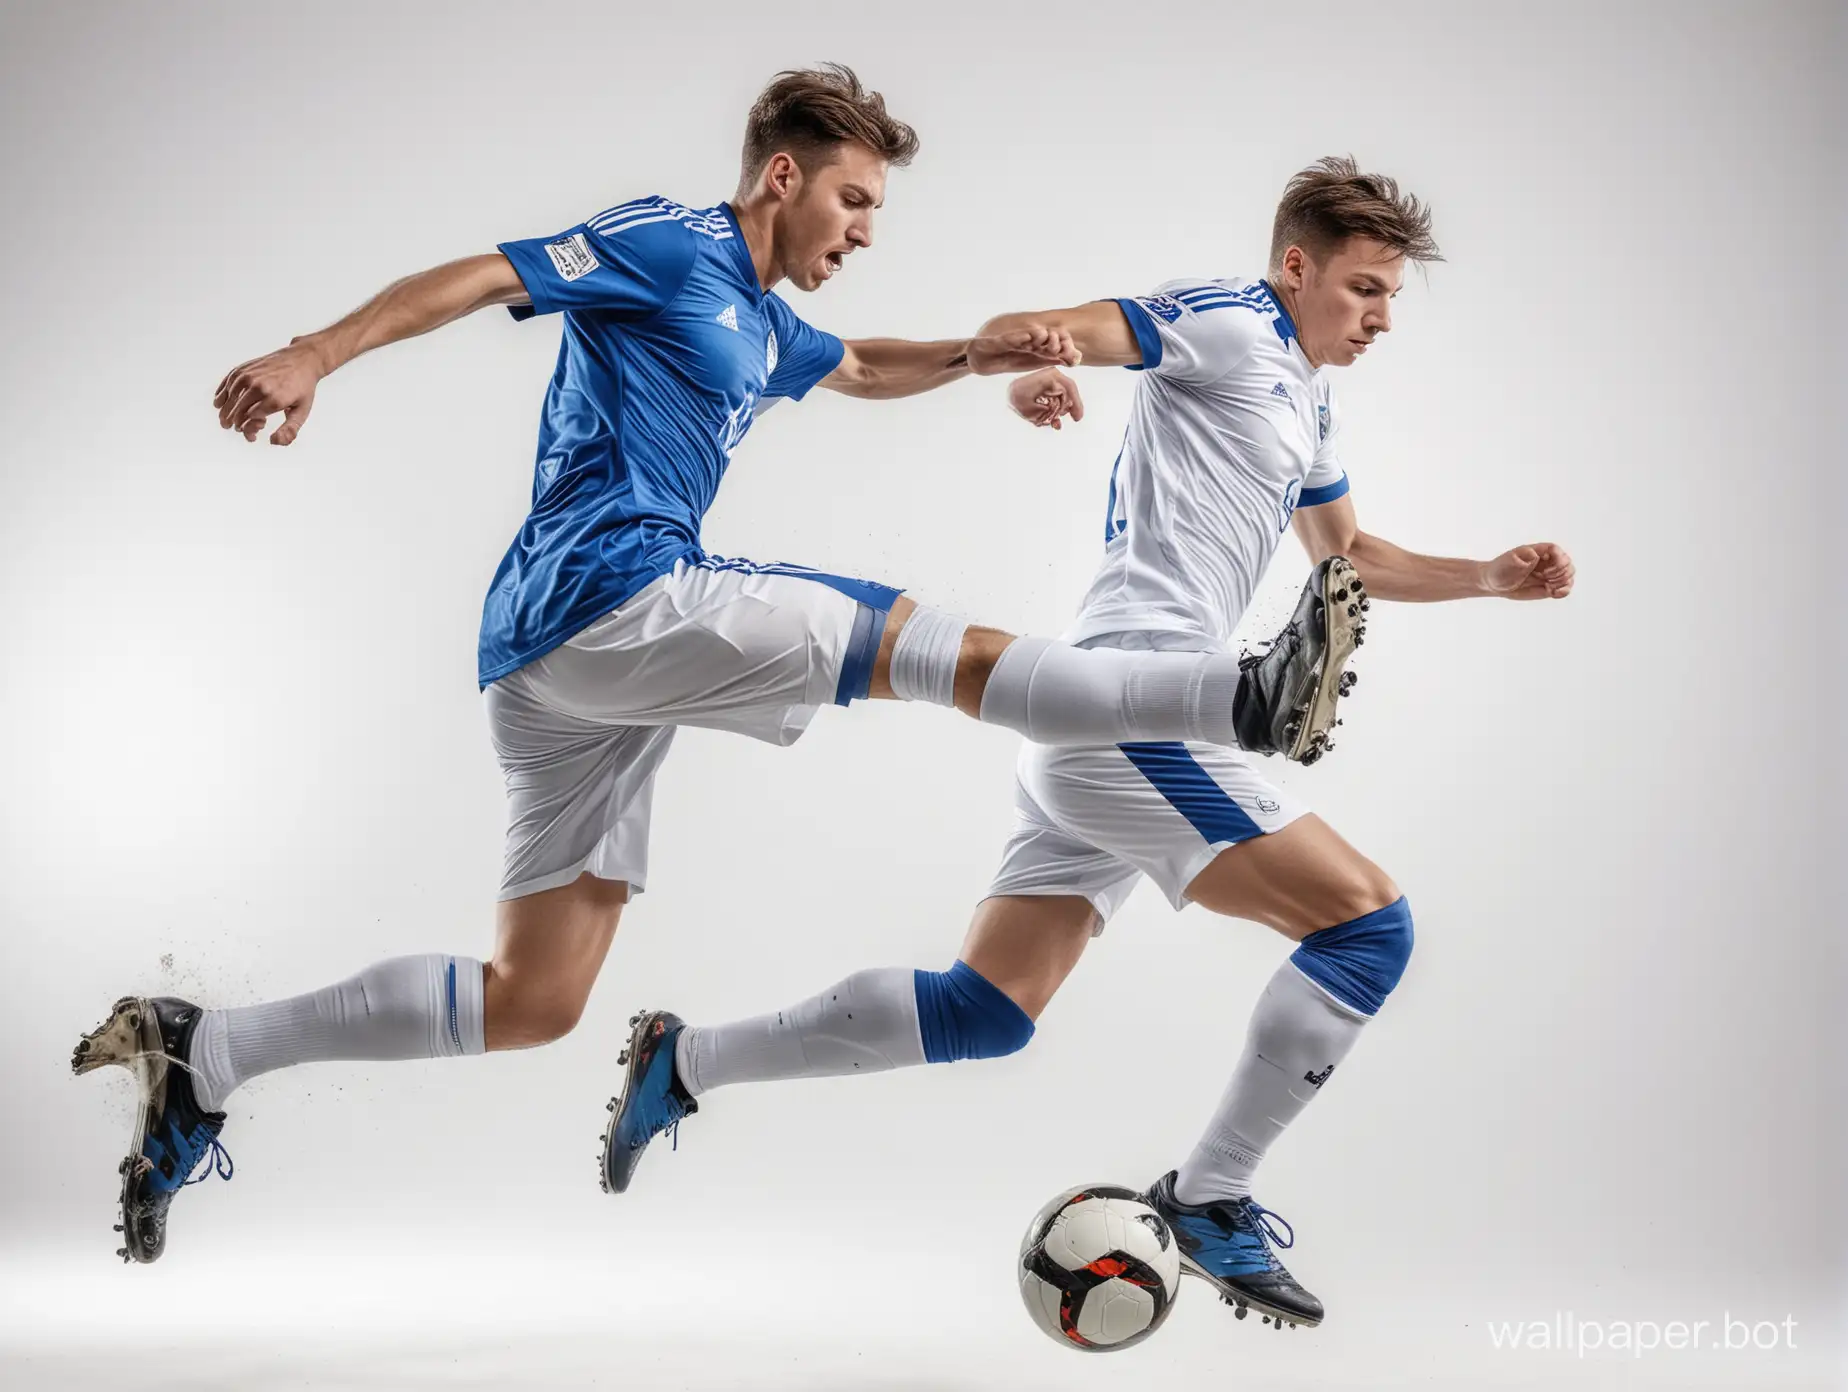 Dynamic-Soccer-Player-in-UHDR-Detail-Striking-Ball